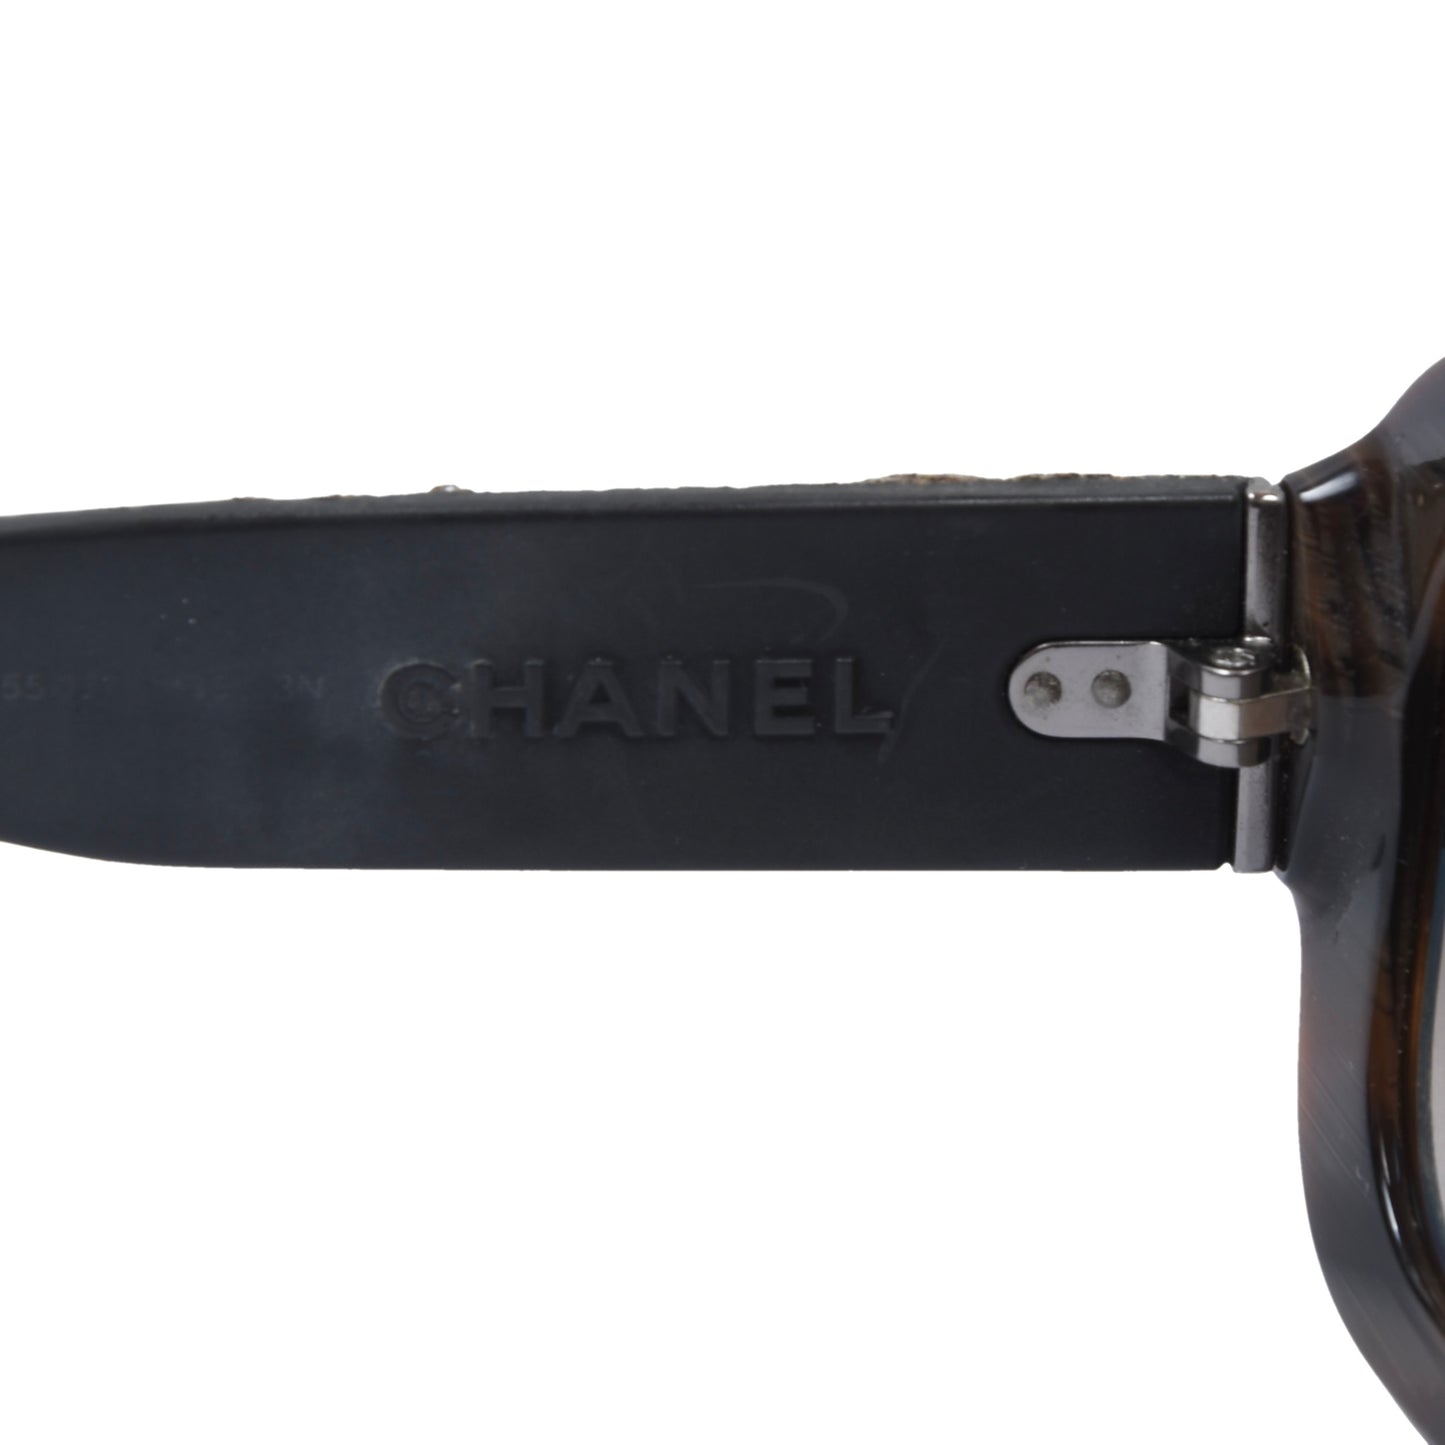 Chanel Mod. 5240 Sunglasses - Tweed